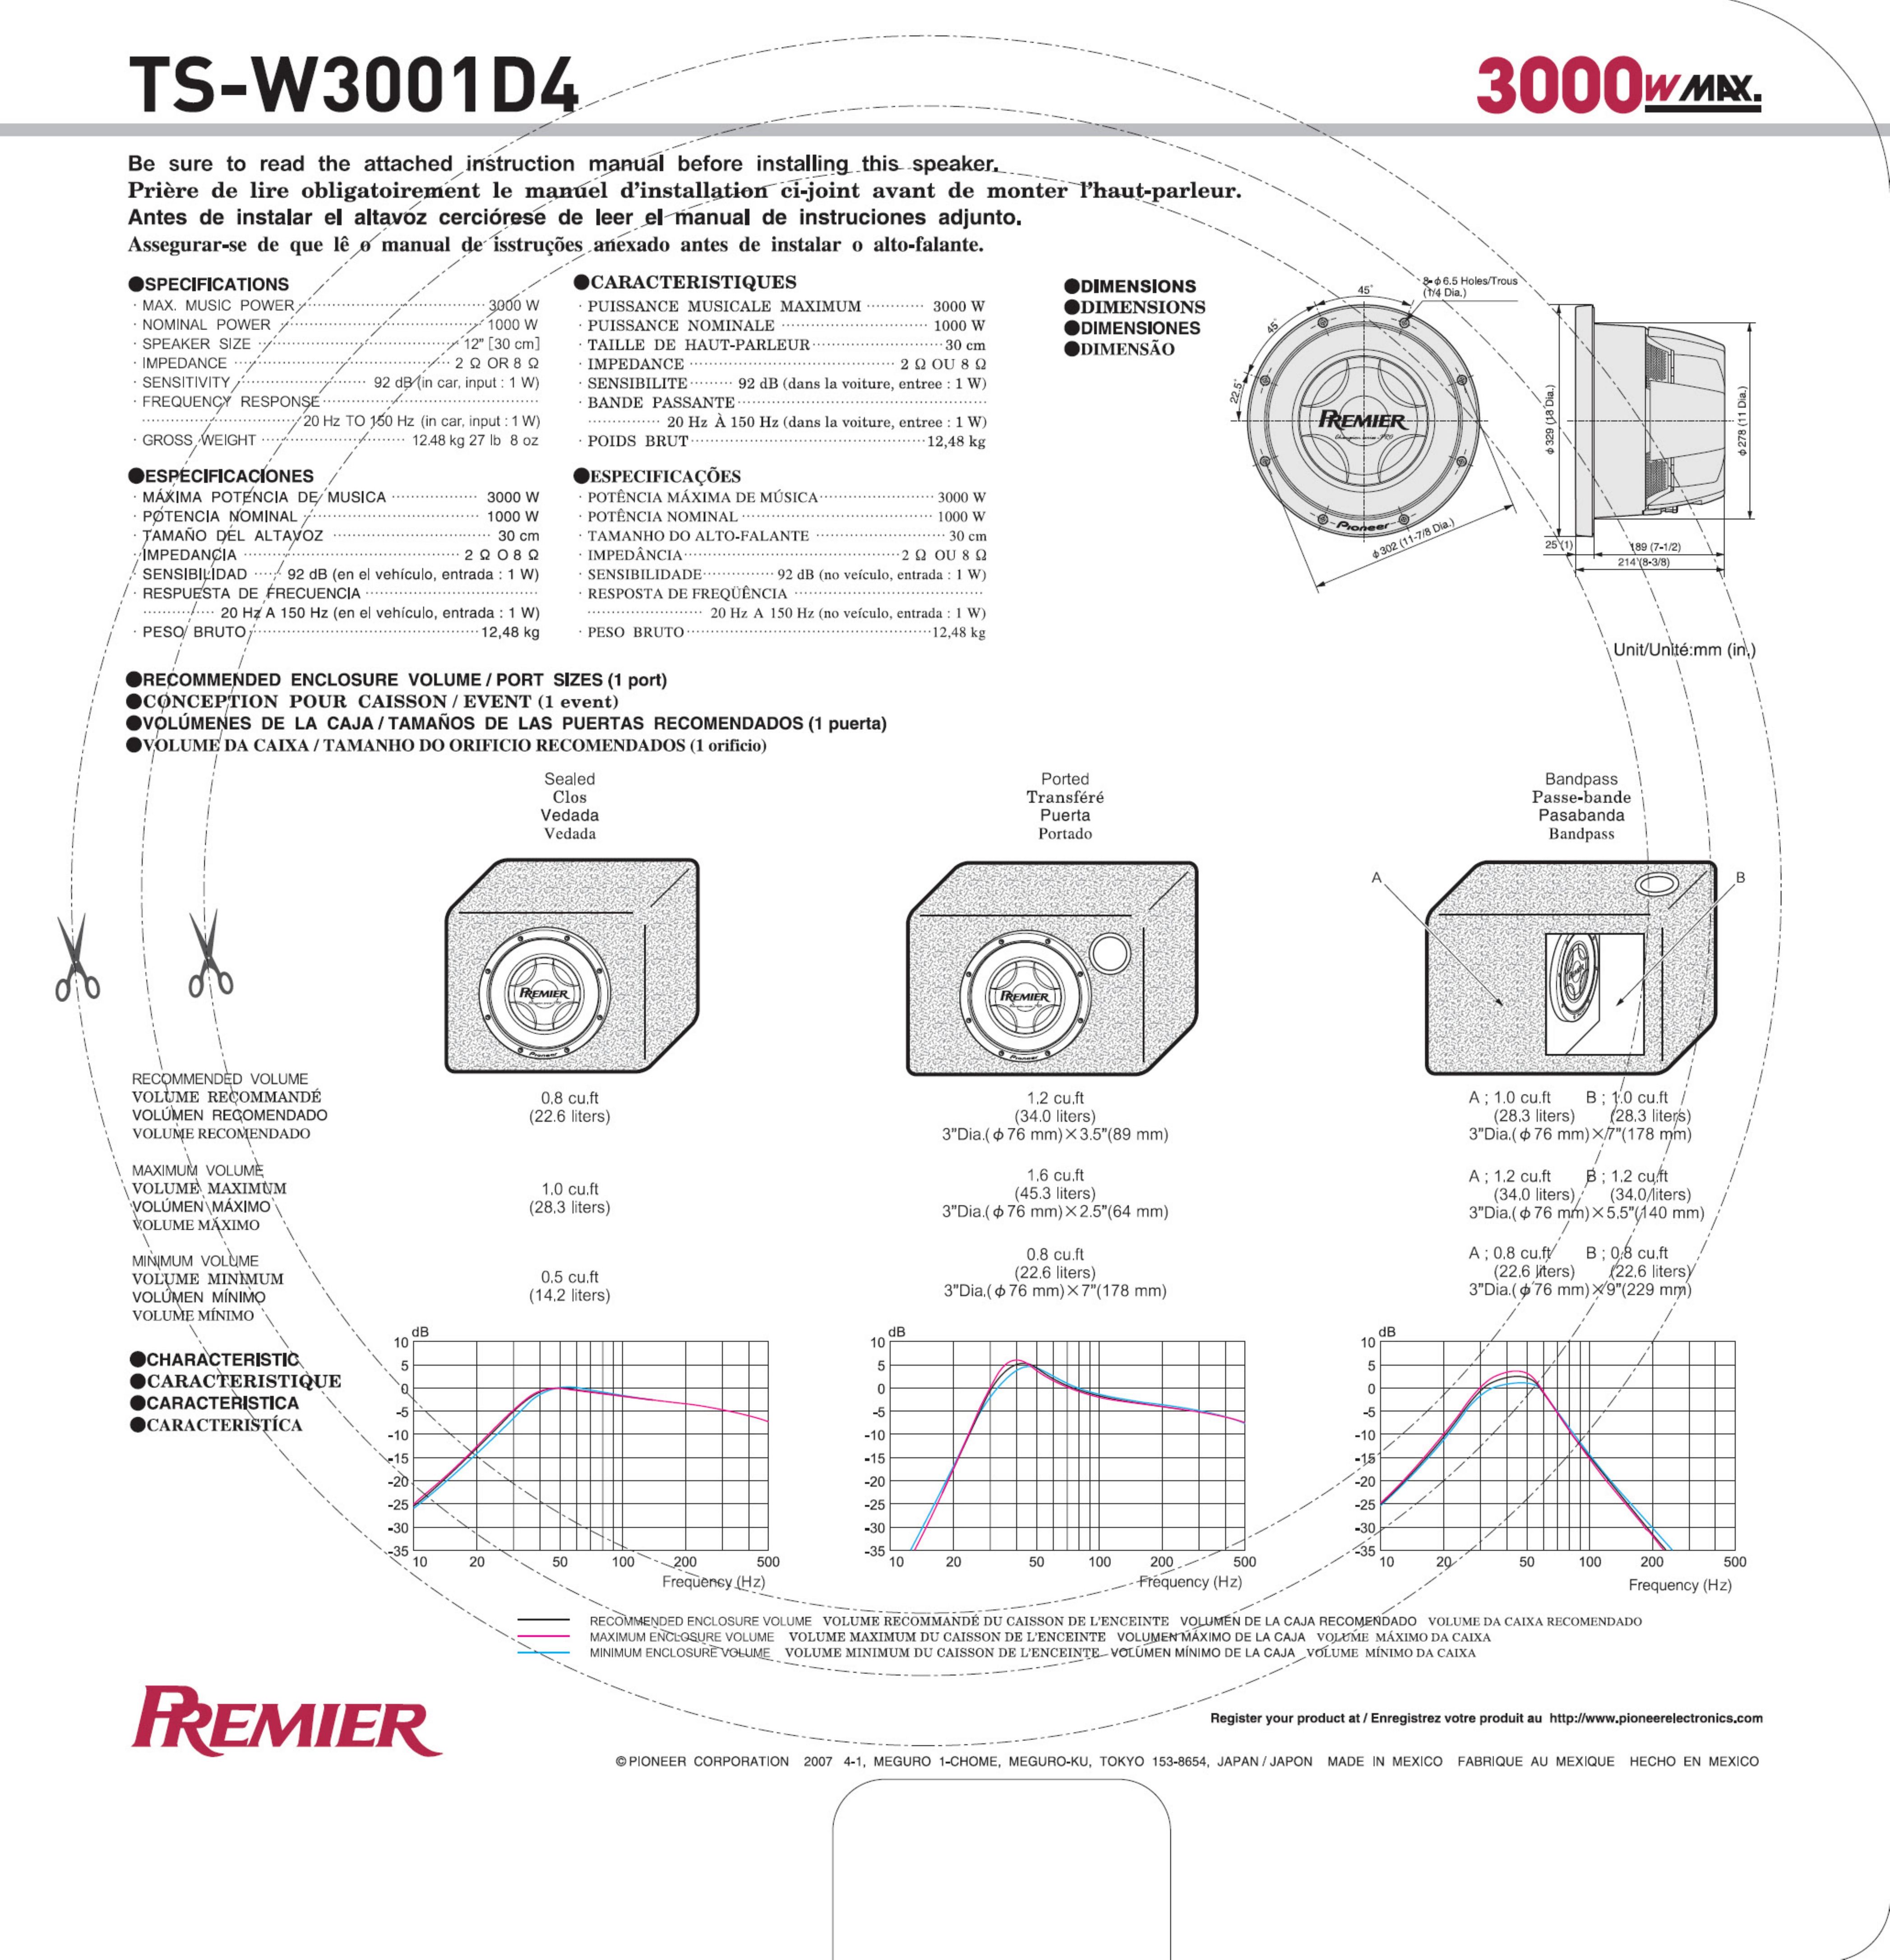 Pioneer TS-W3001D4 Car Speaker User Manual